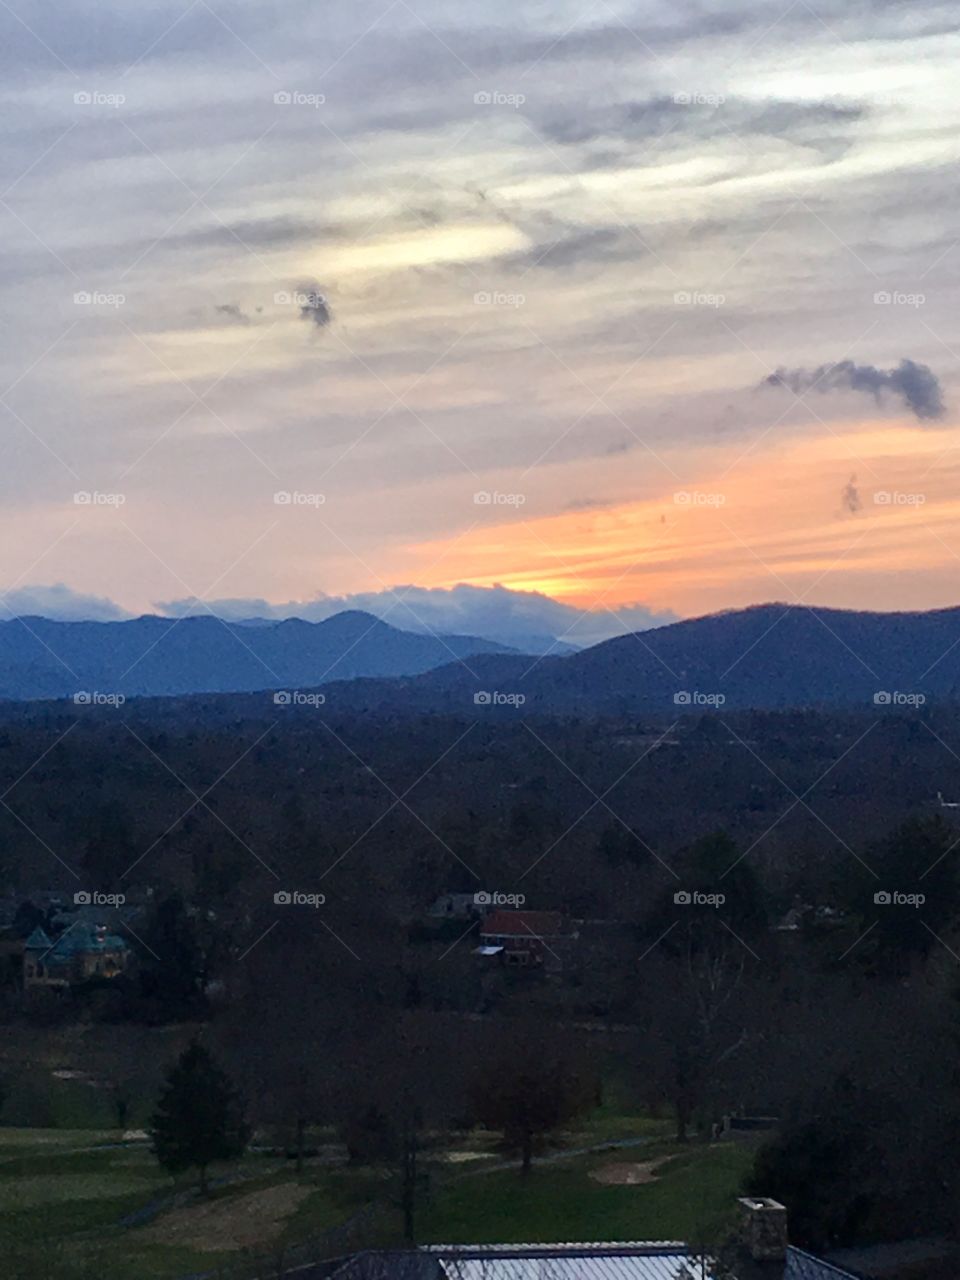 North Carolina Mountains and Sunset